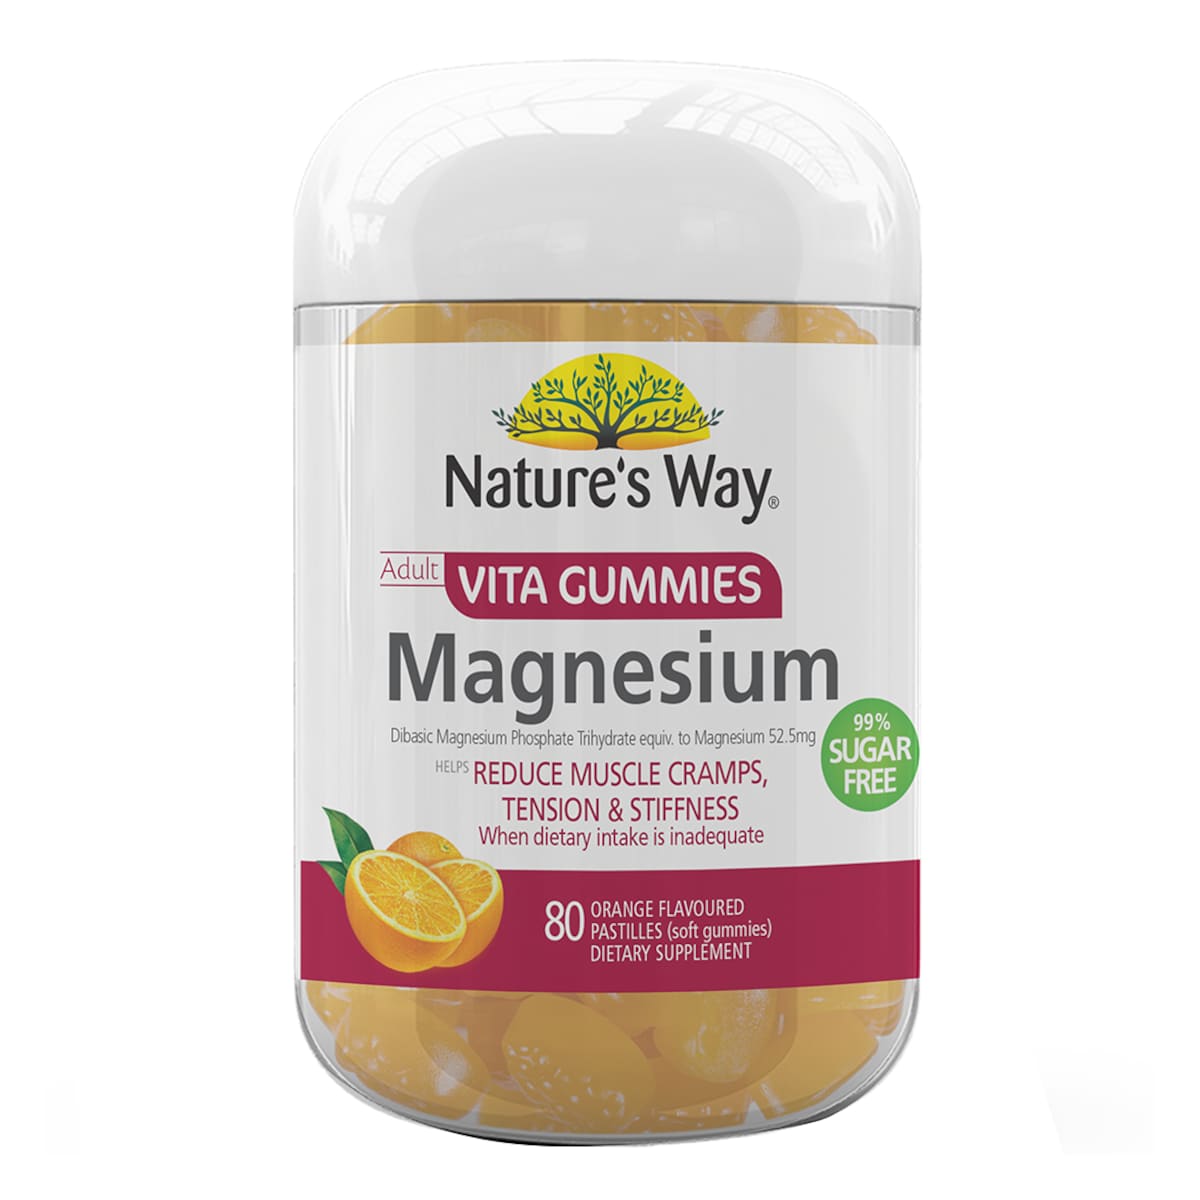 Natures Way Adult Vita Gummies Magnesium 99.8% Sugar Free 80 Pack (New)